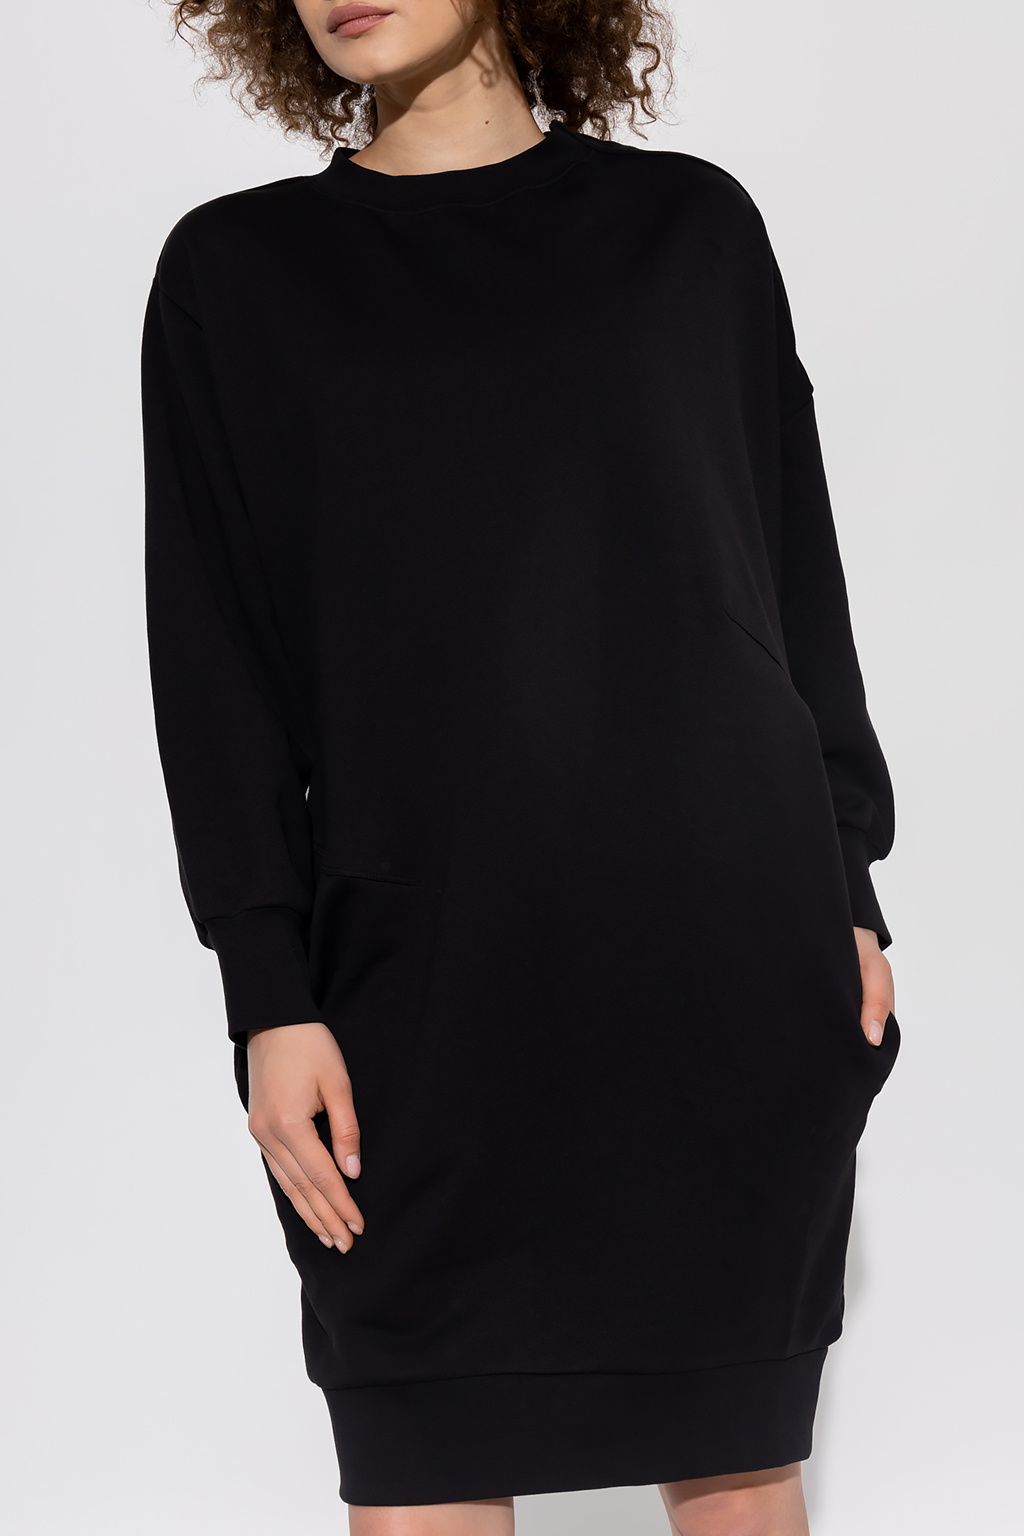 Vivienne Westwood Loose-fitting Levis dress